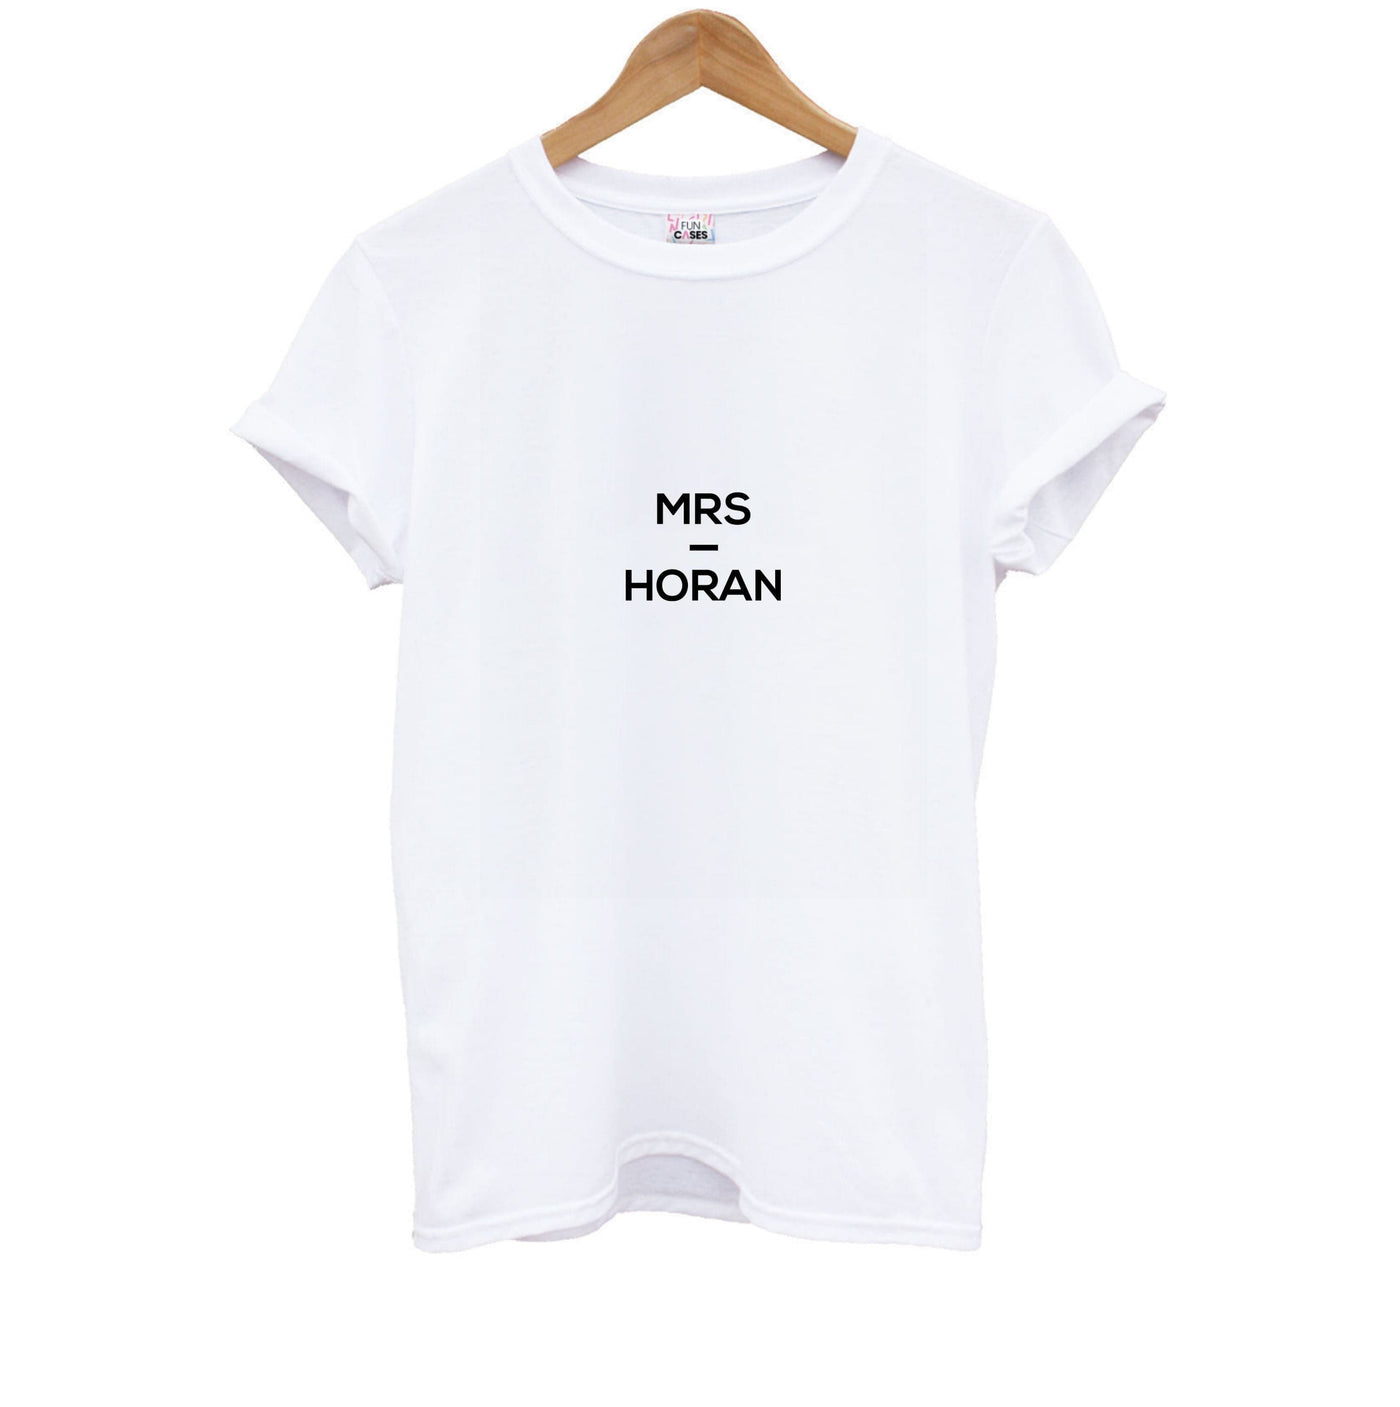 Mrs Horan - Niall Horan Kids T-Shirt